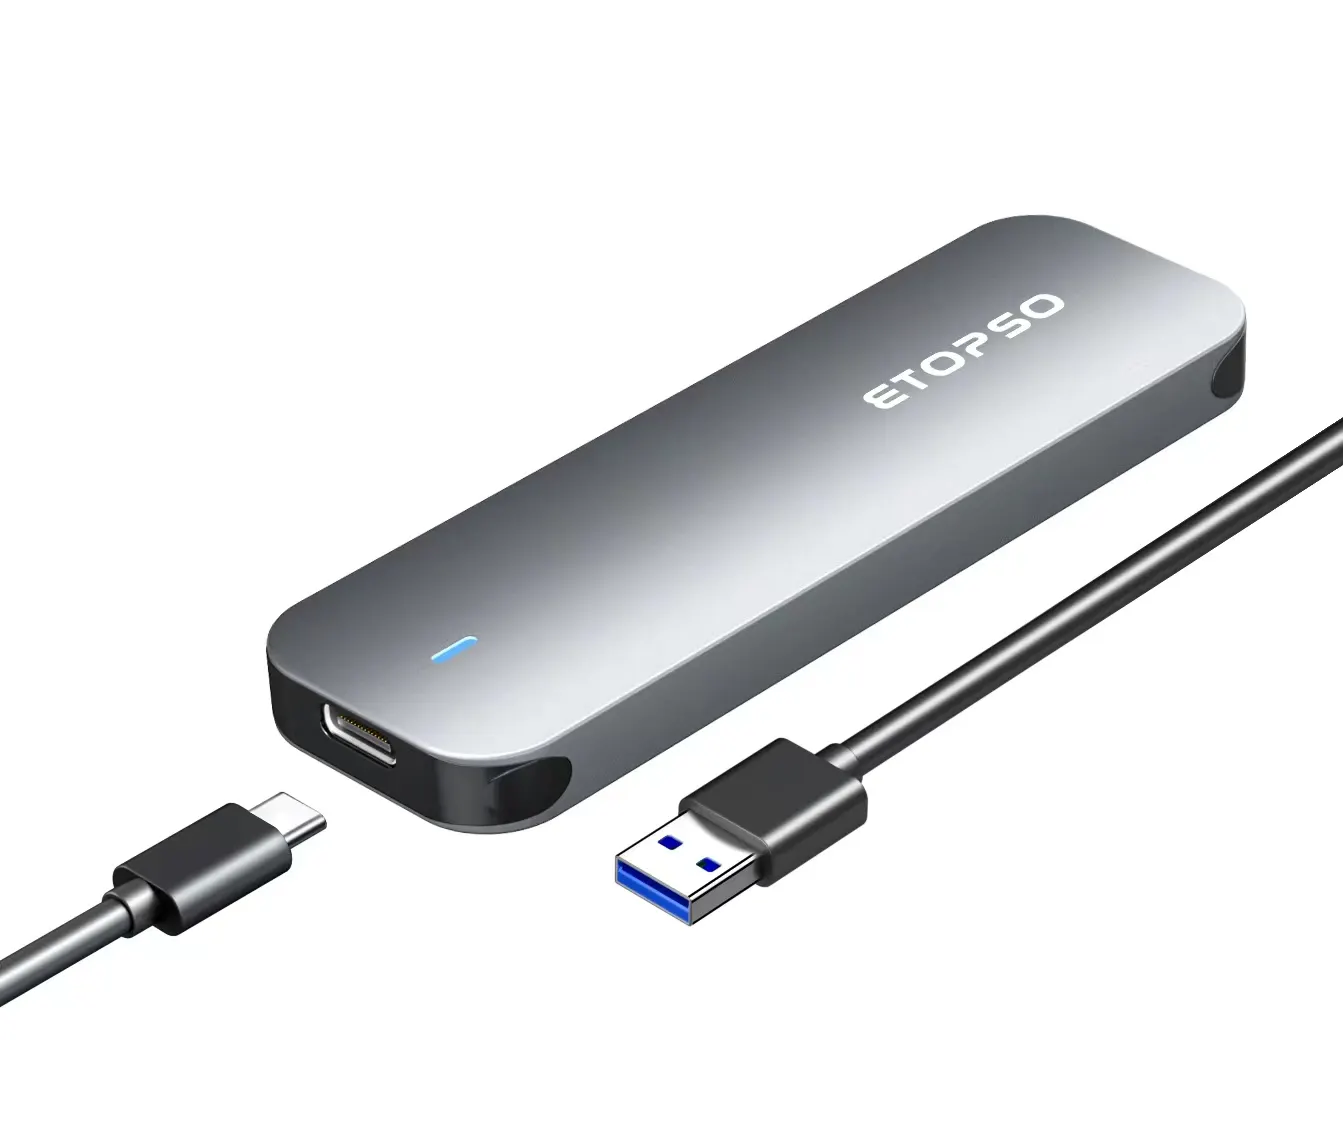 Etopso hot sale OEM/ODM m.2 sata ngff Solid State Drive USB 3.1 Type-C 128gb 256gb 512gb 1tb External Portable SSD